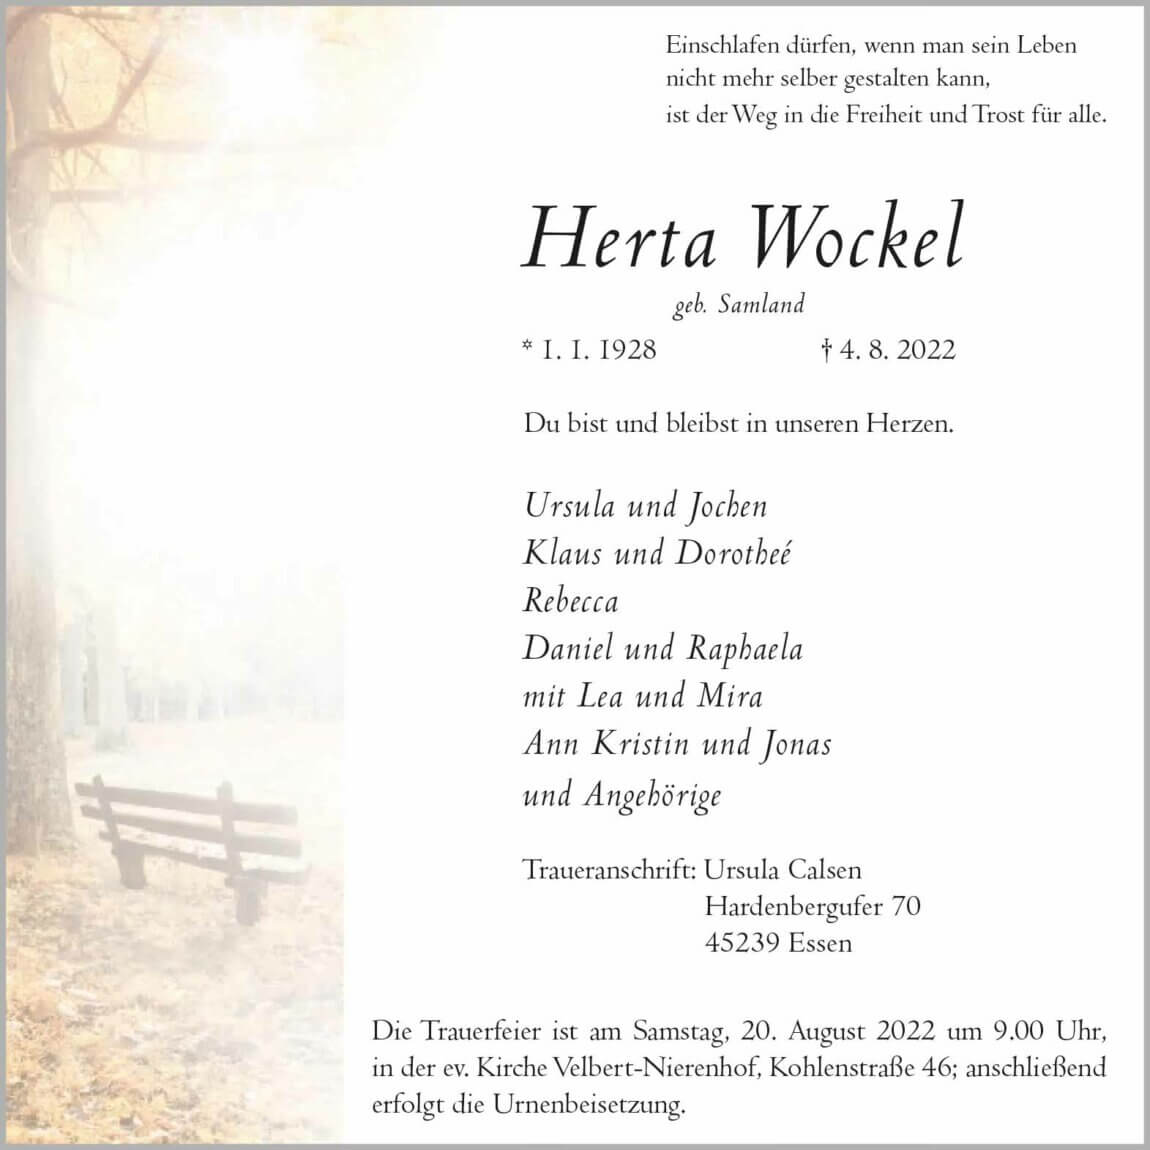 13.08.2022_Wockel-Herta.jpg